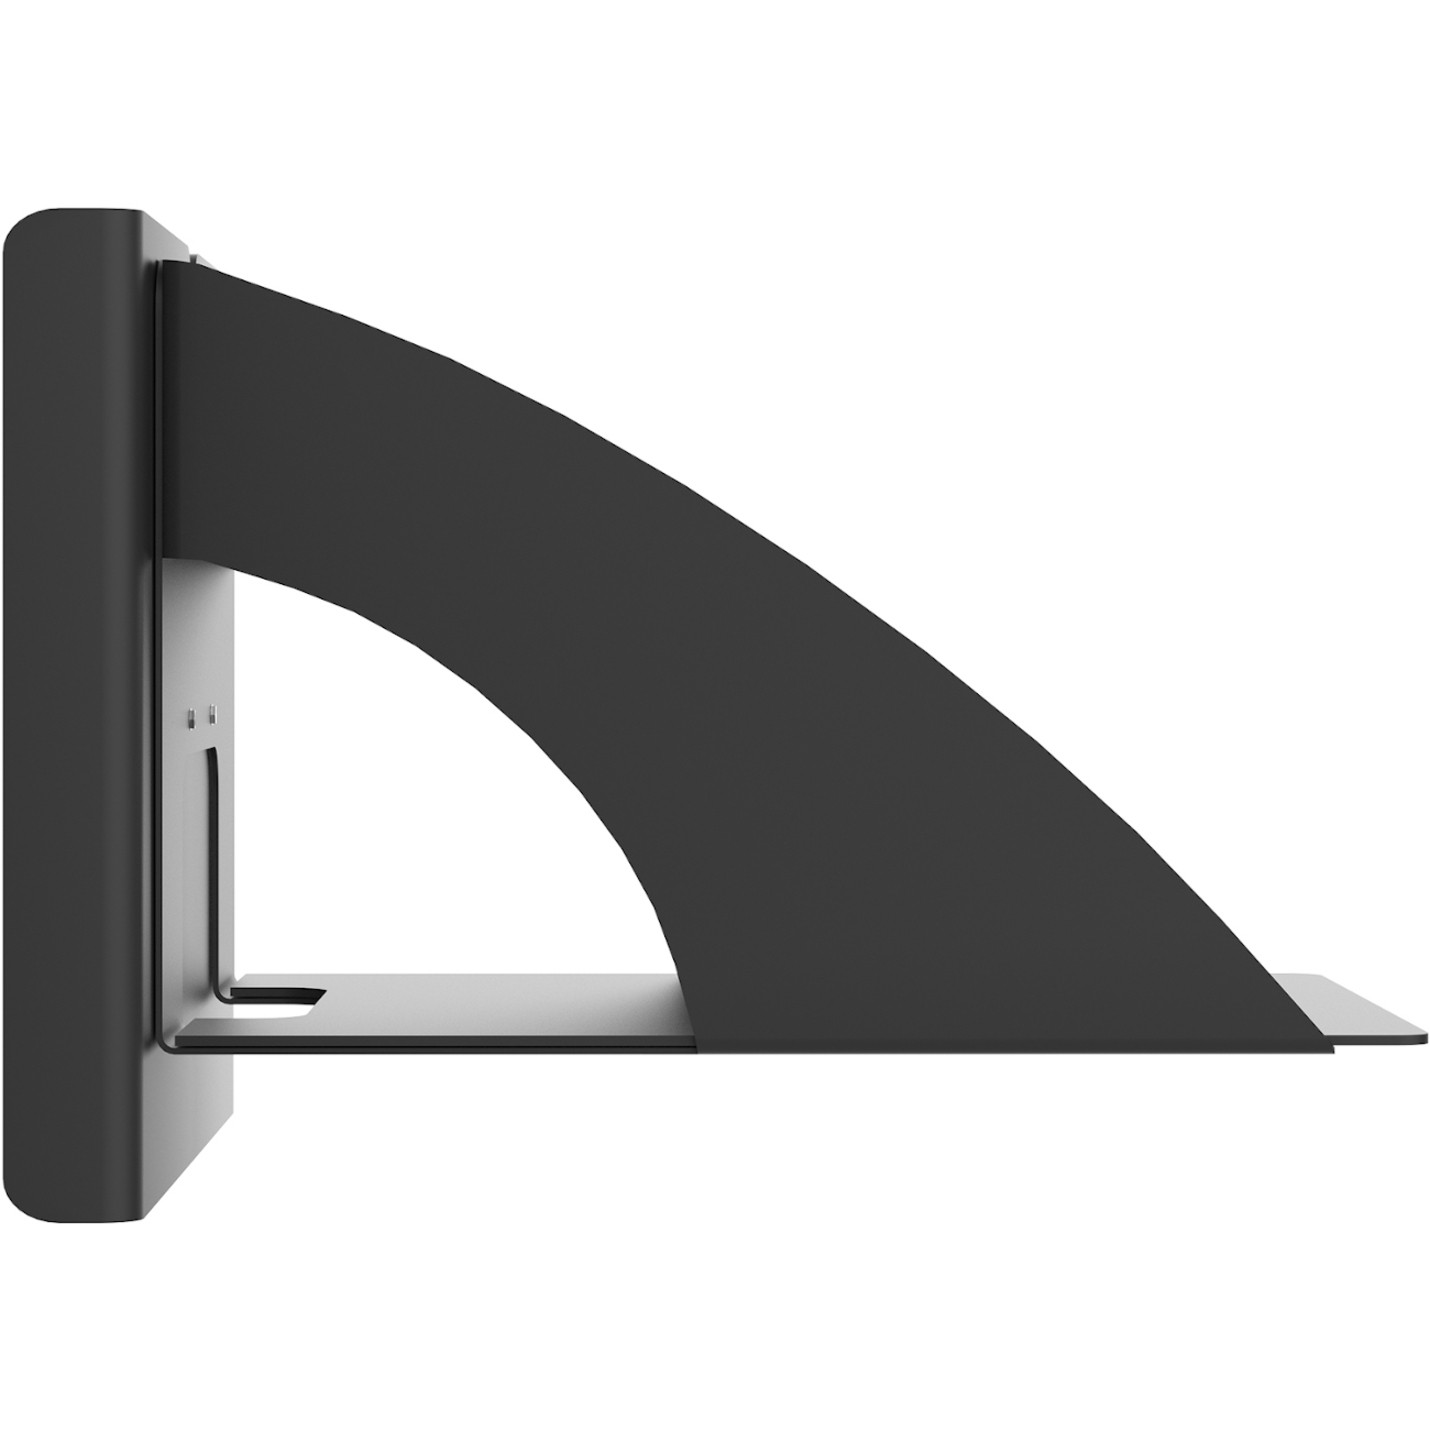 Cta Digital Accessories Mounting Shelf for Printer, Kiosk, Mobile StandBlack ADD-PARAPRTB